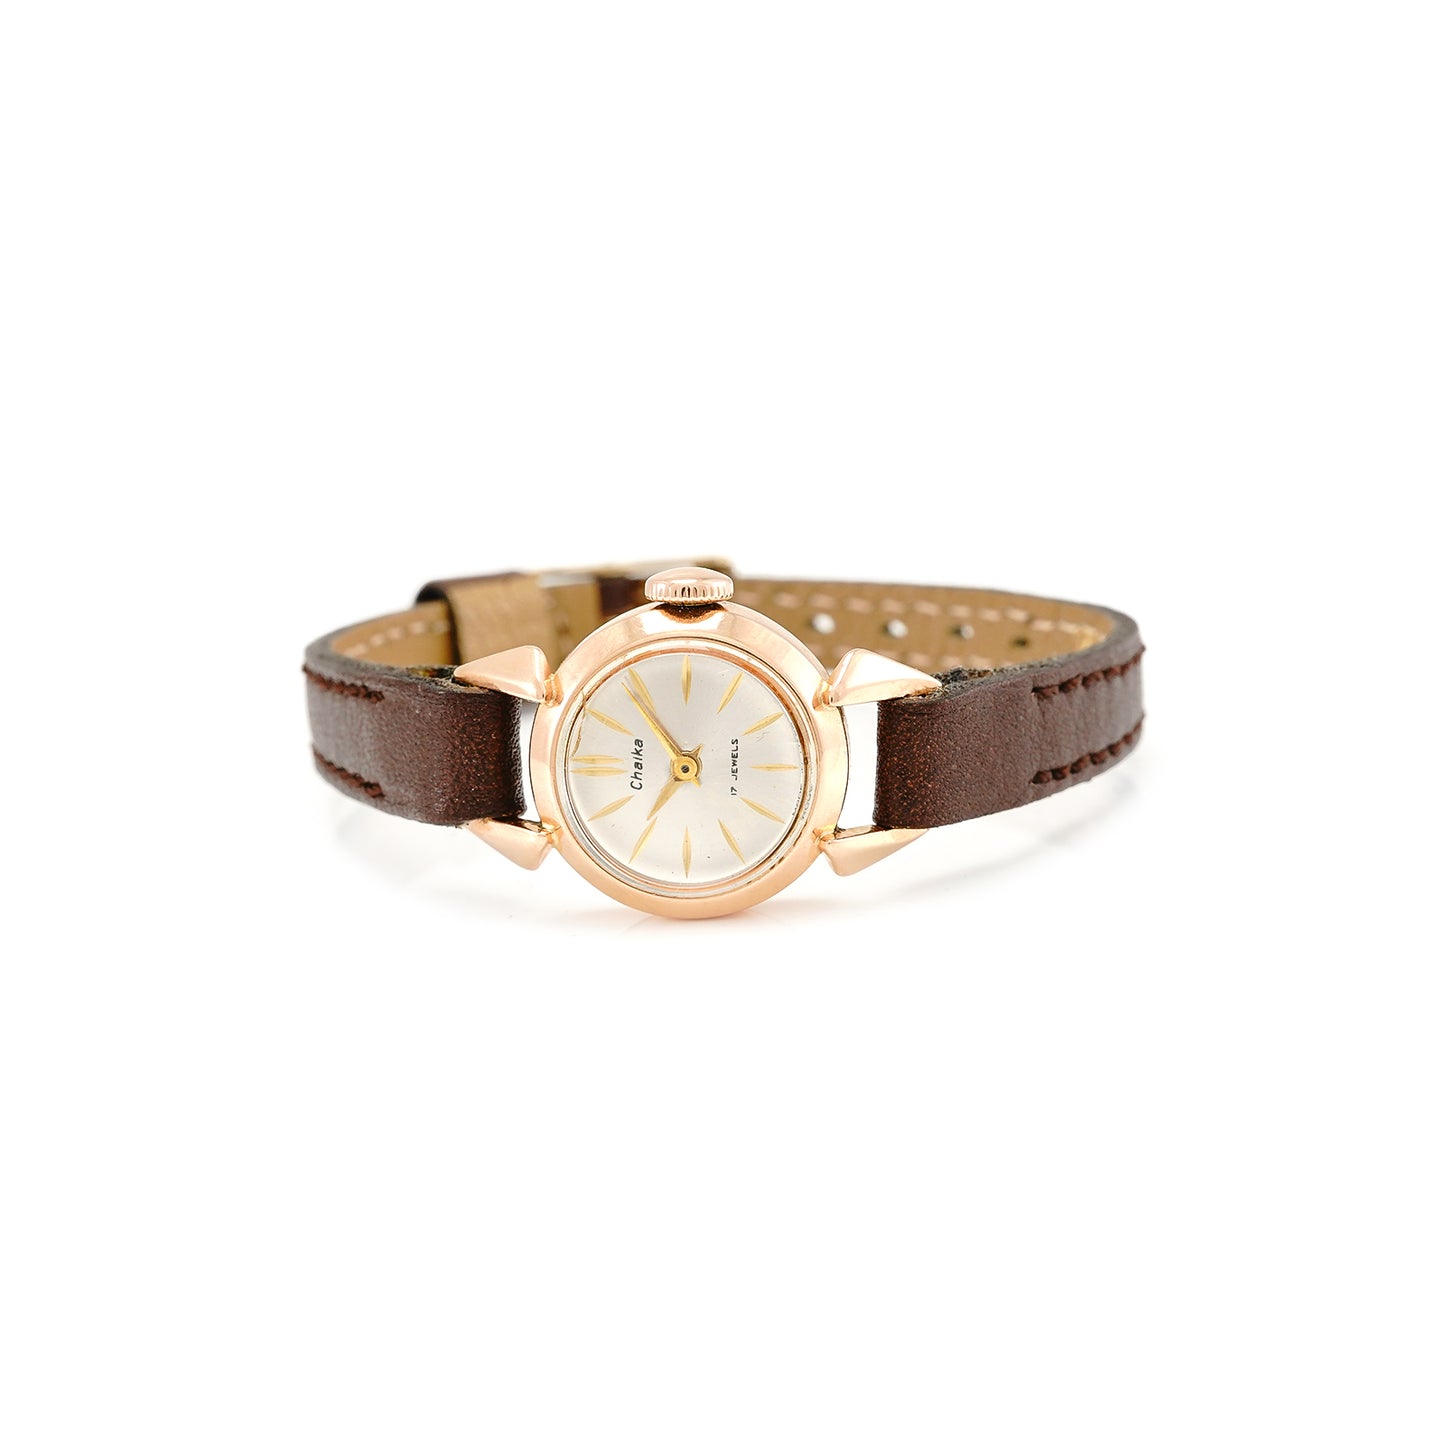 Vintage wristwatch windup watch Chaika 583 14K rose gold red gold women's watch leather strap